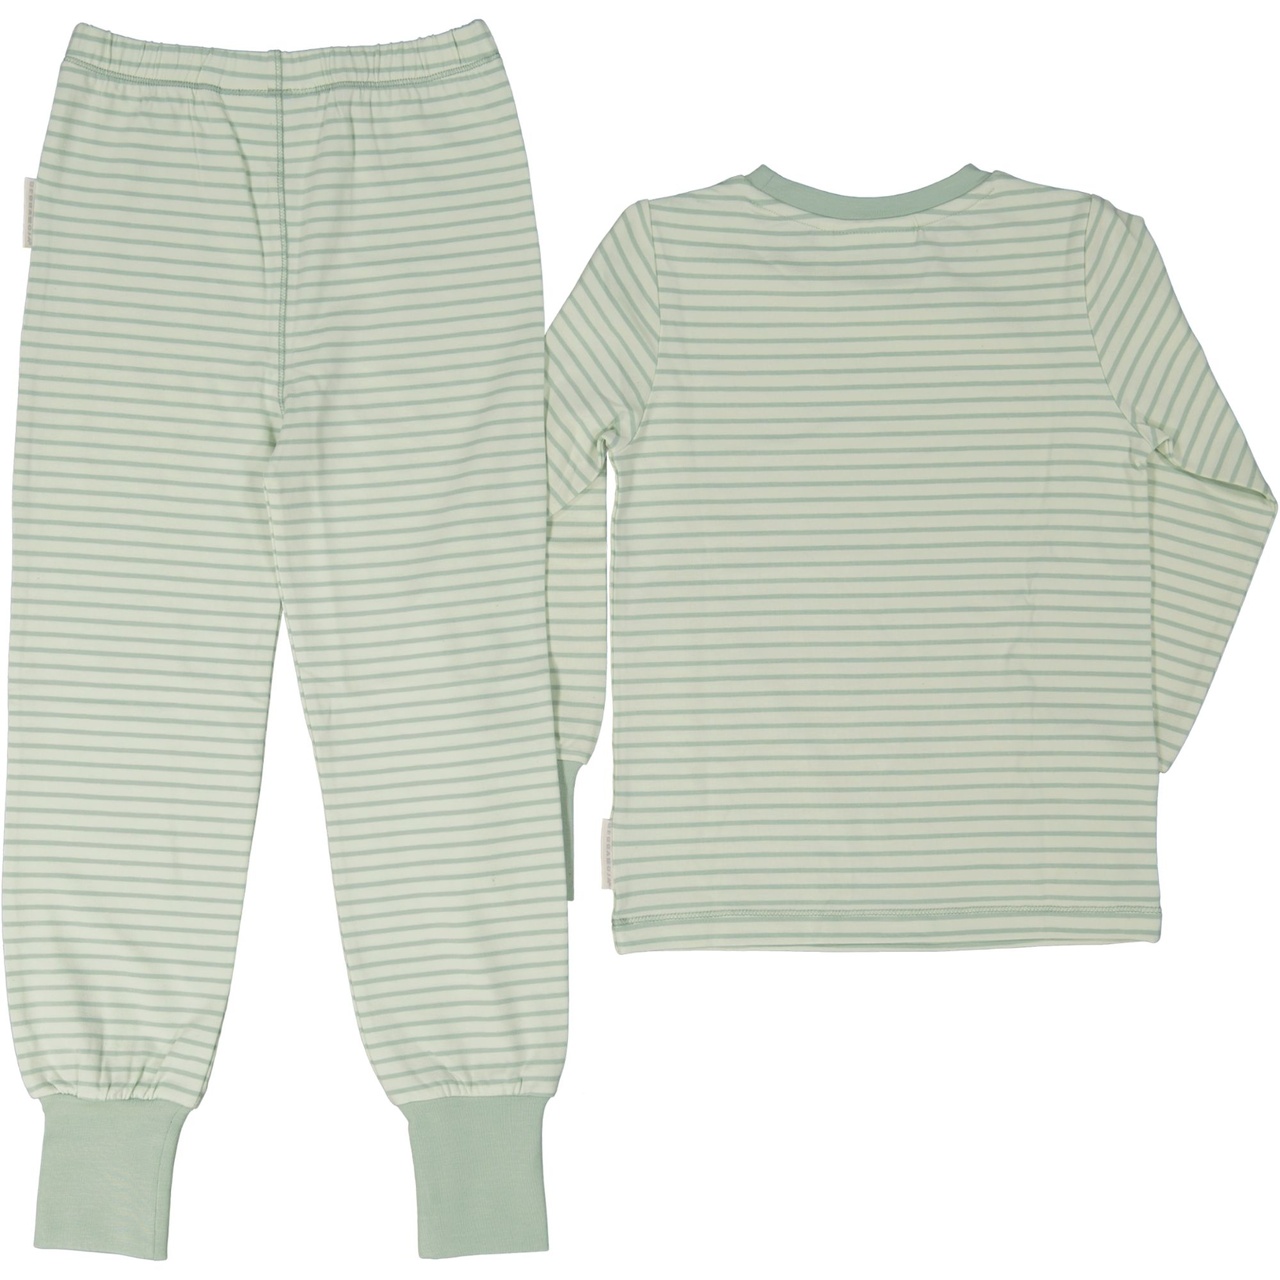 Two pcs pyjamas Classic L.green/green  134/140